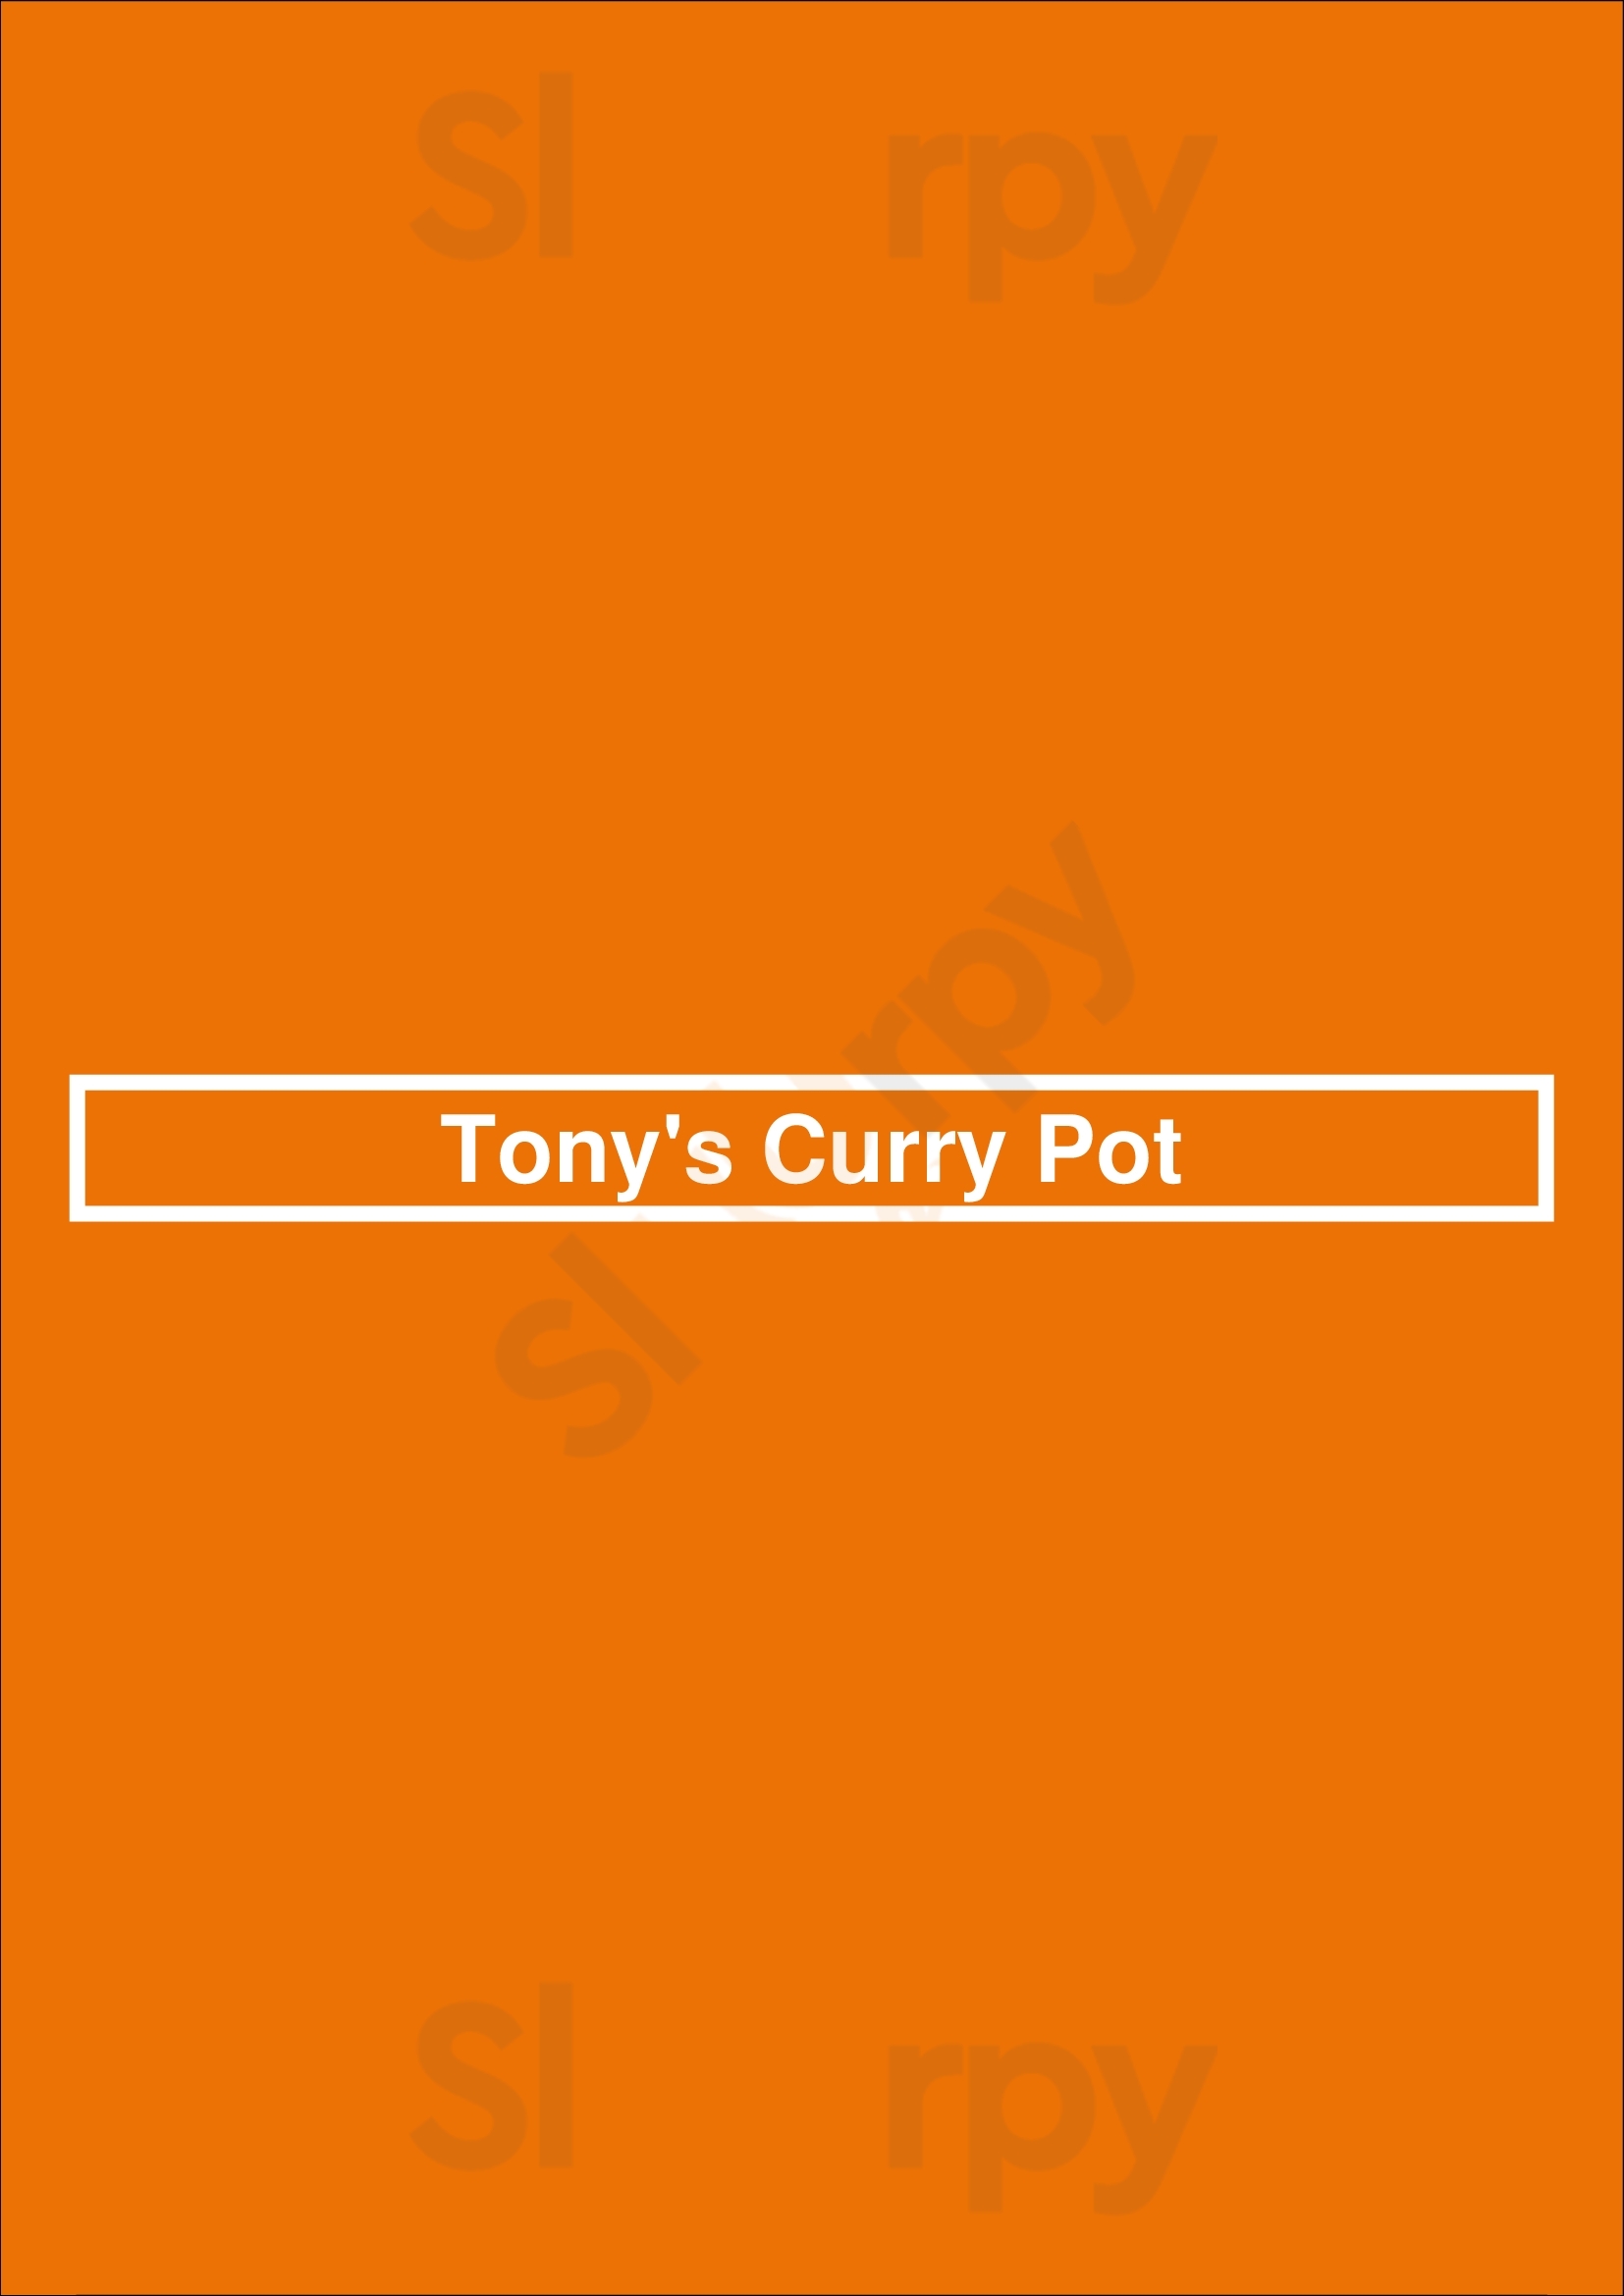 Tony's Curry Pot Bury Menu - 1